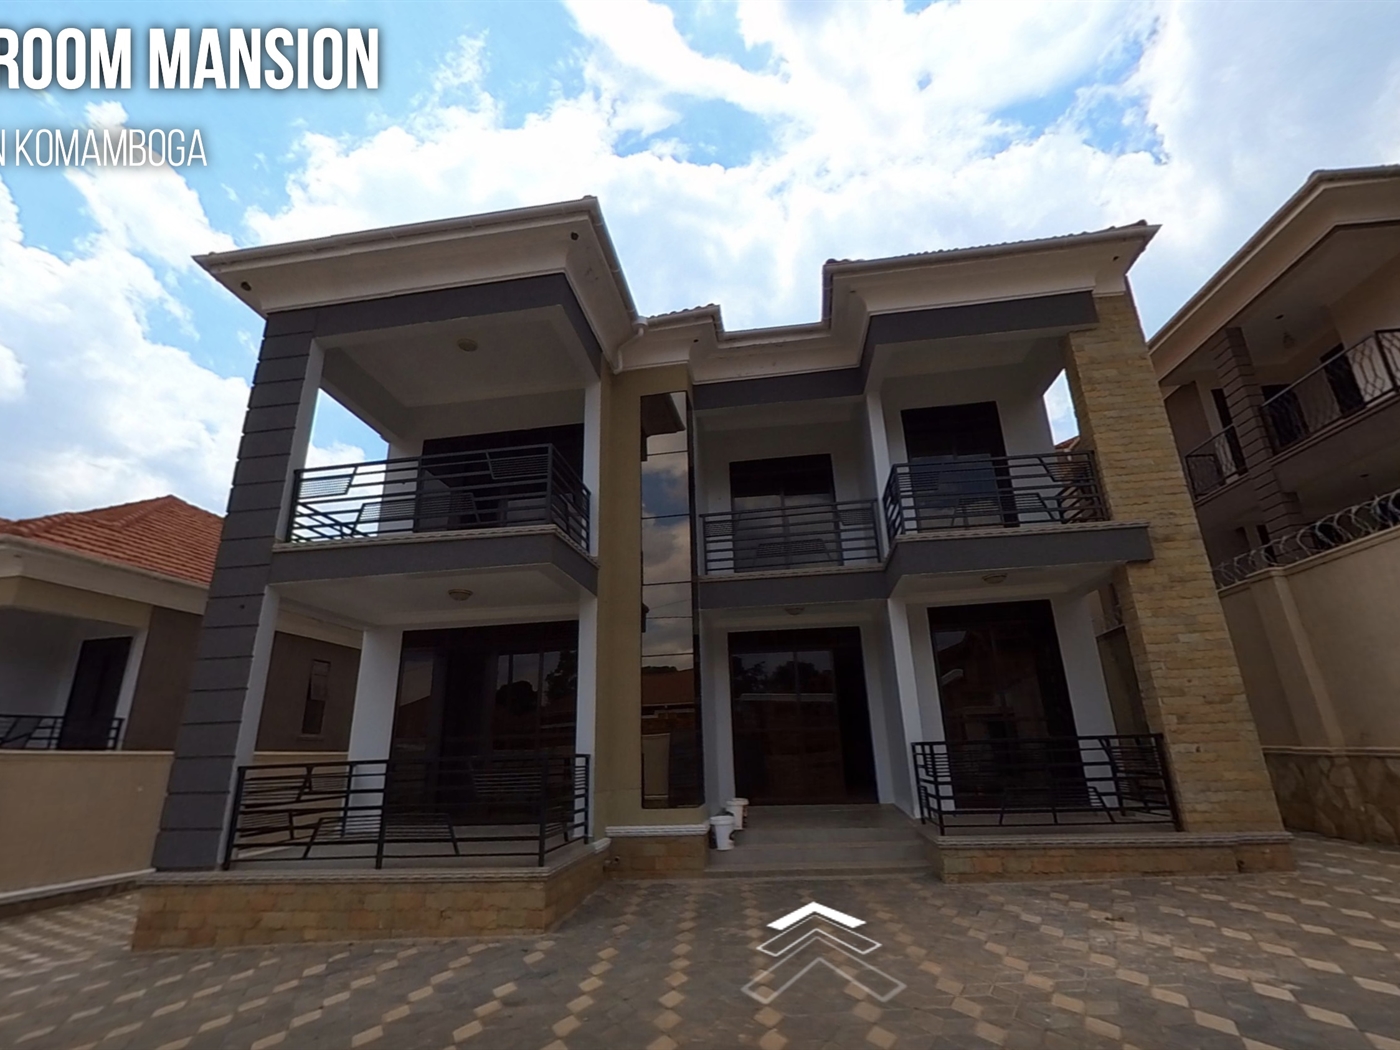 Mansion for sale in Komamboga Kampala